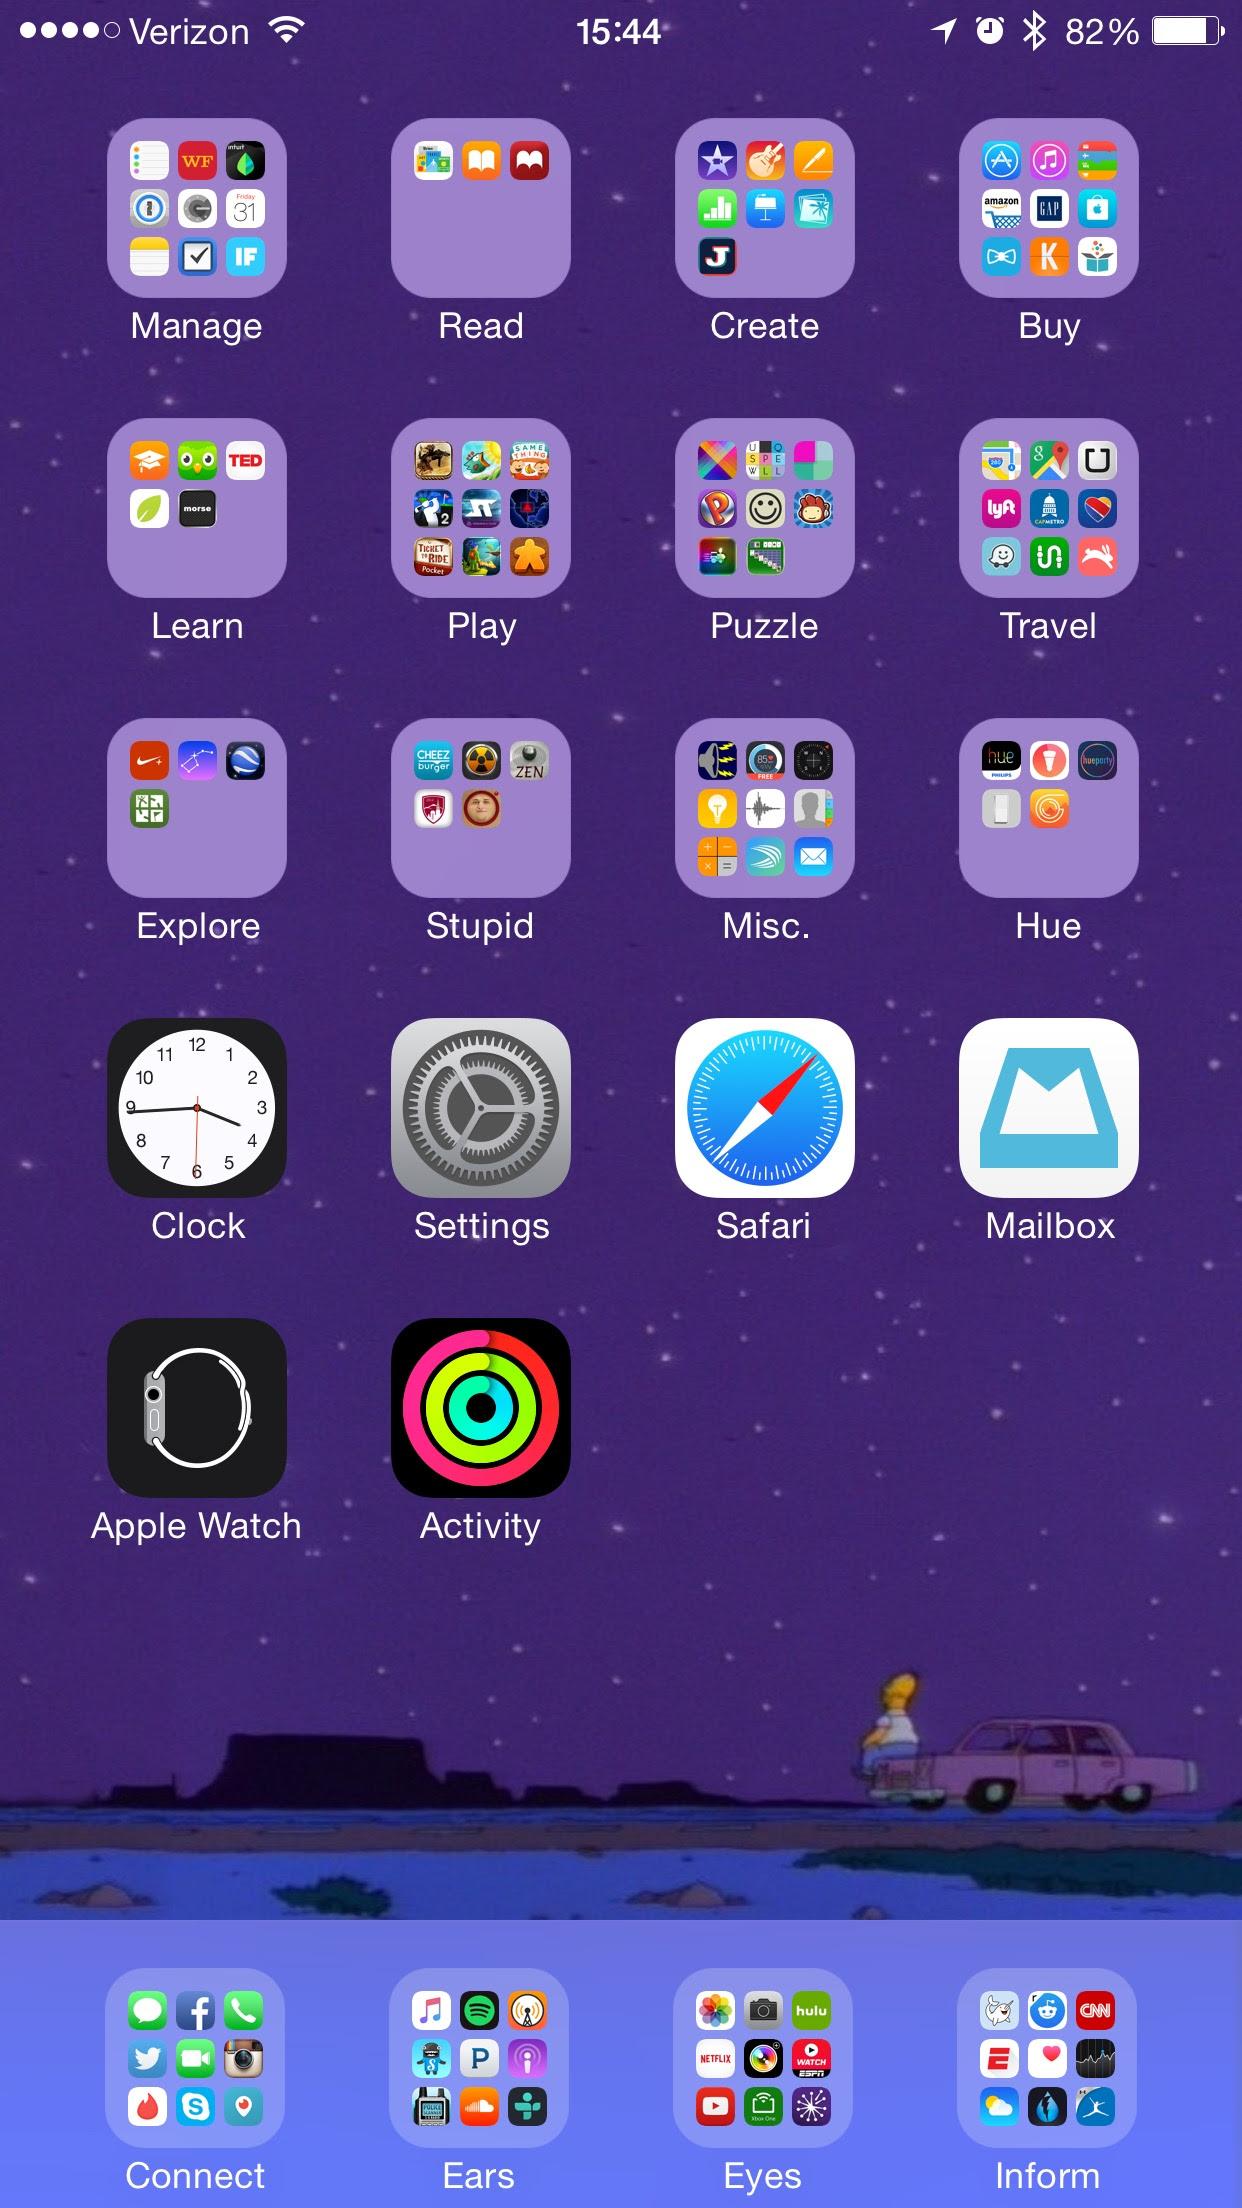 simpsons wallpaper iphone,violet,purple,screenshot,technology,electronic device